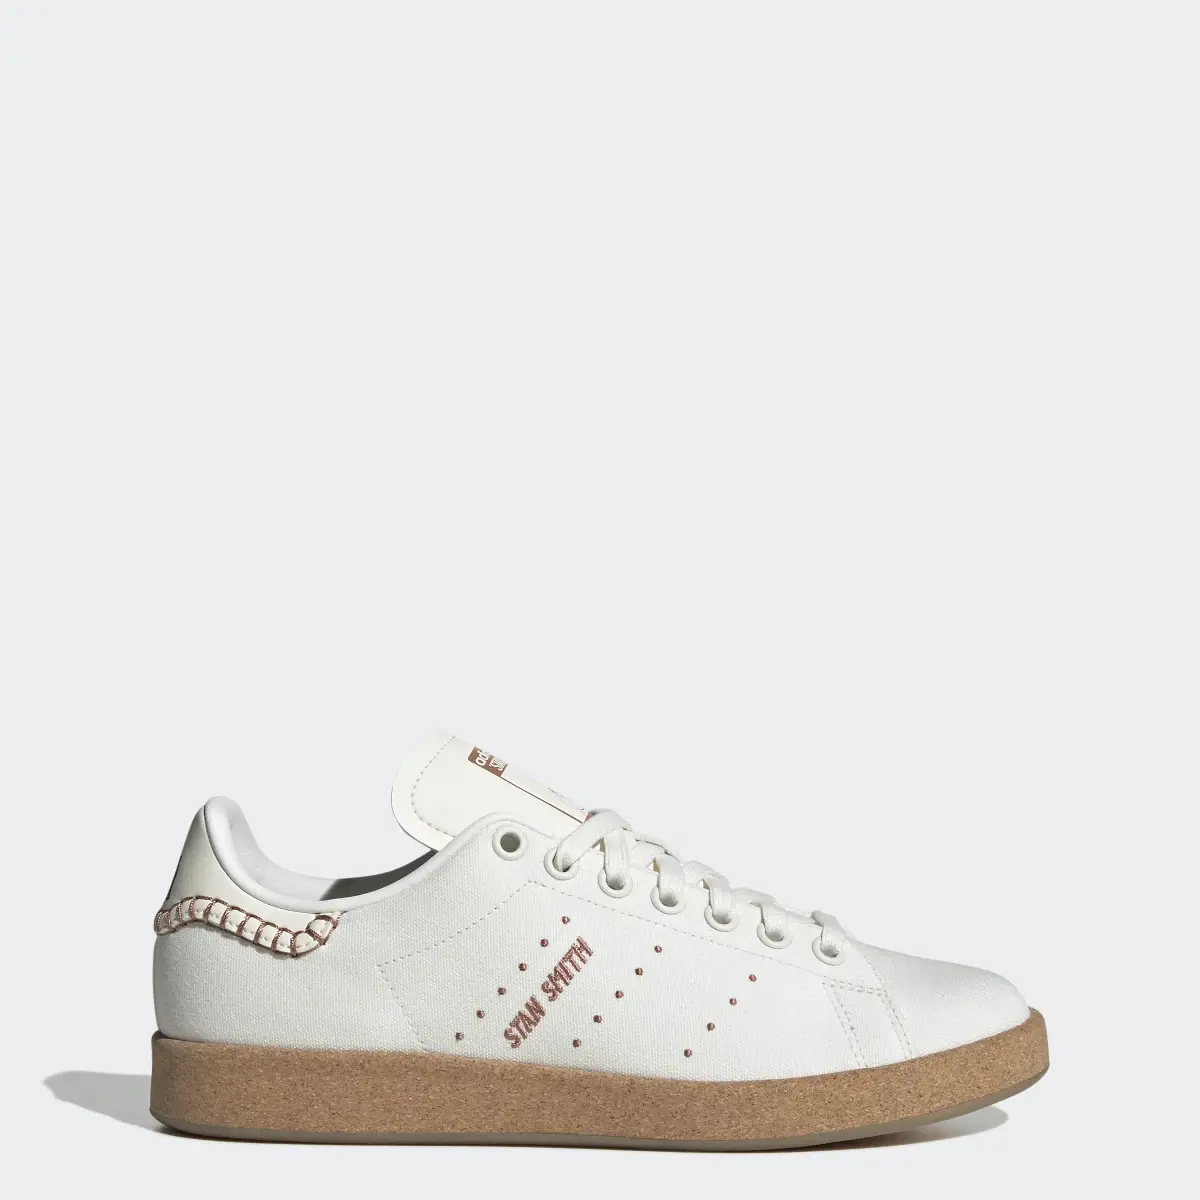 Adidas Stan Smith x Moomin Shoes. 1